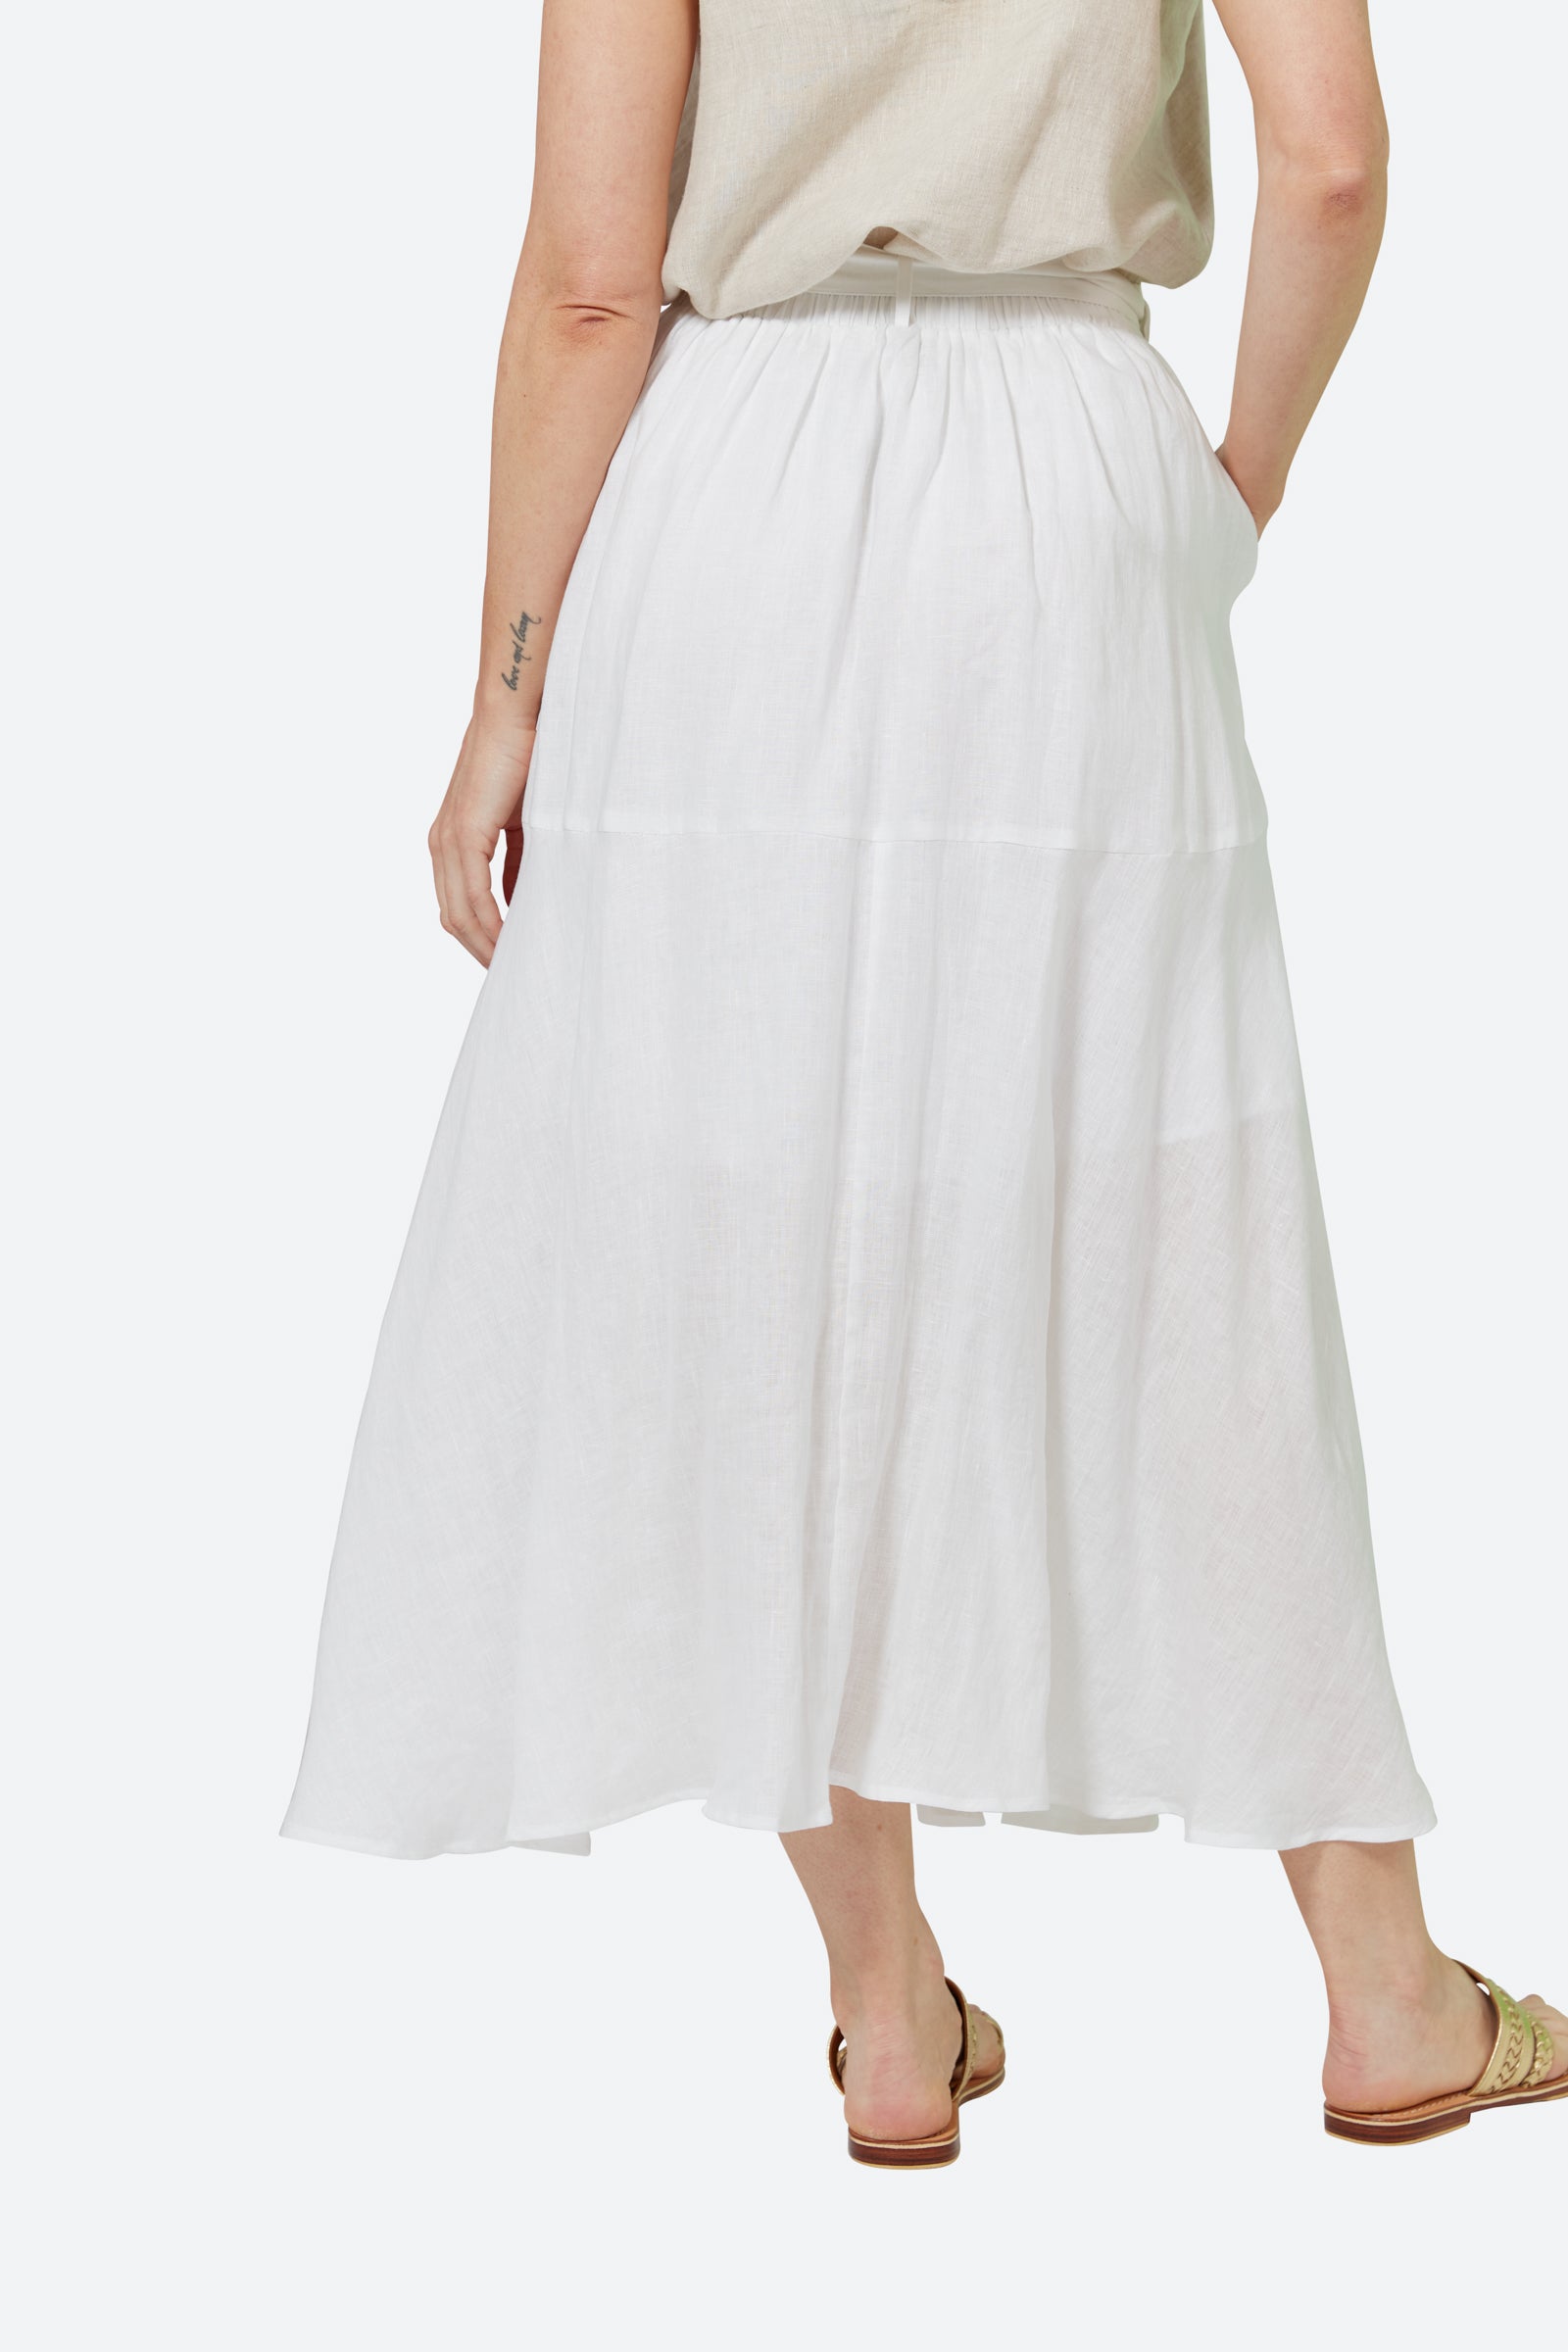 La Vie Wrap Skirt - Blanc - eb&ive Clothing - Skirt Mid Linen